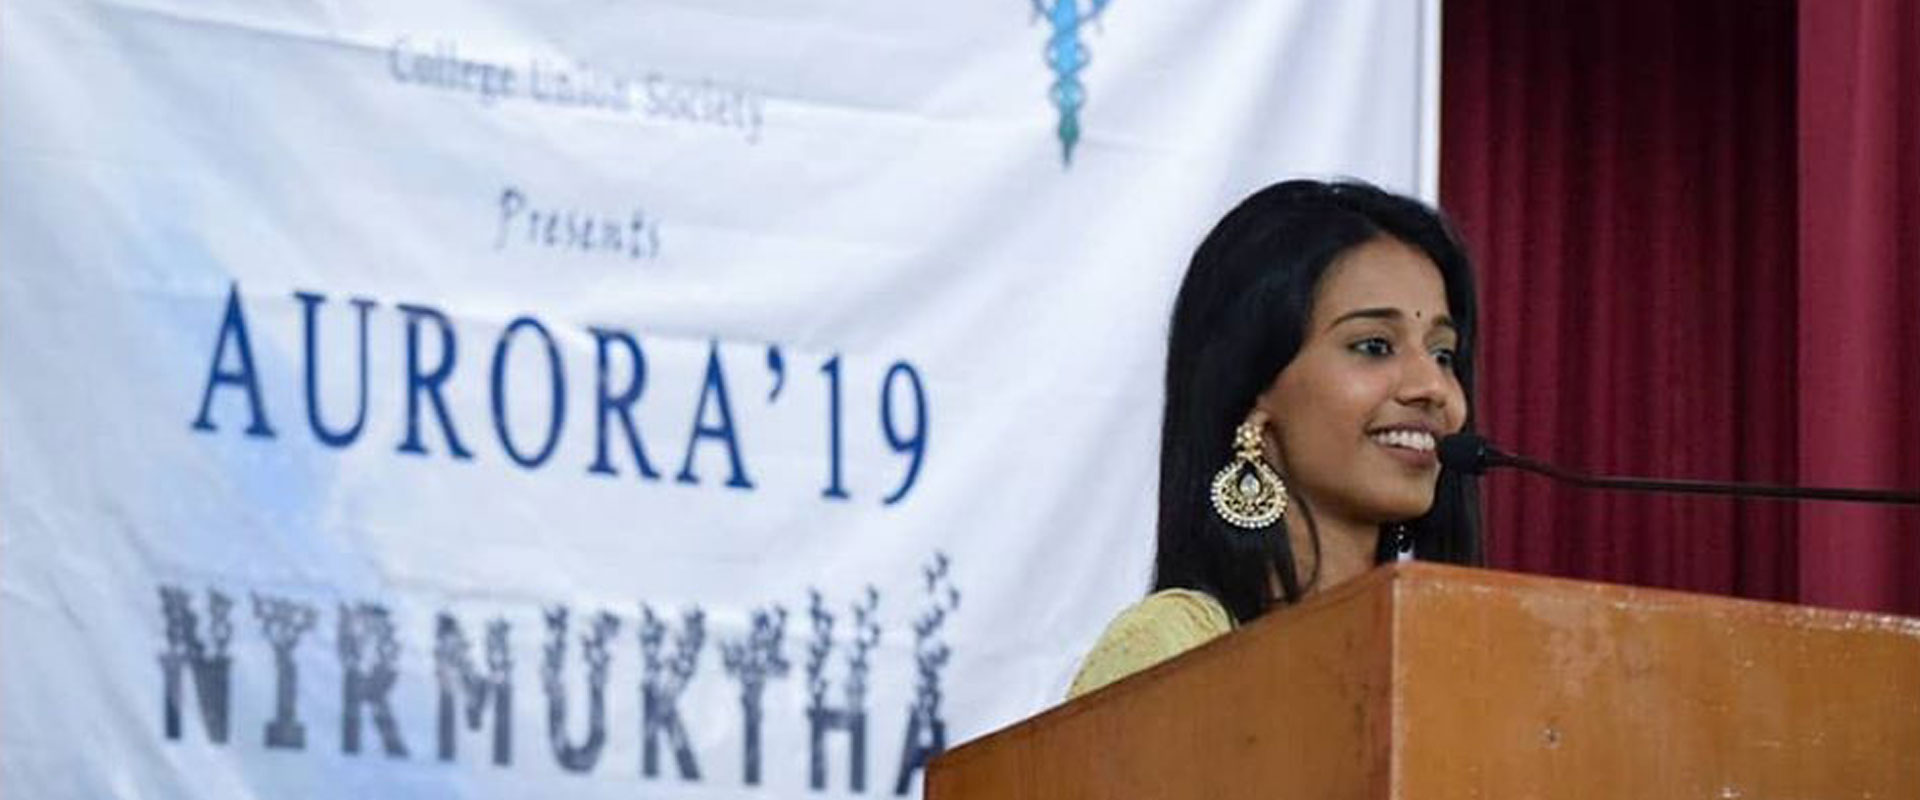 Singer Priyanka NK Aurora 2019